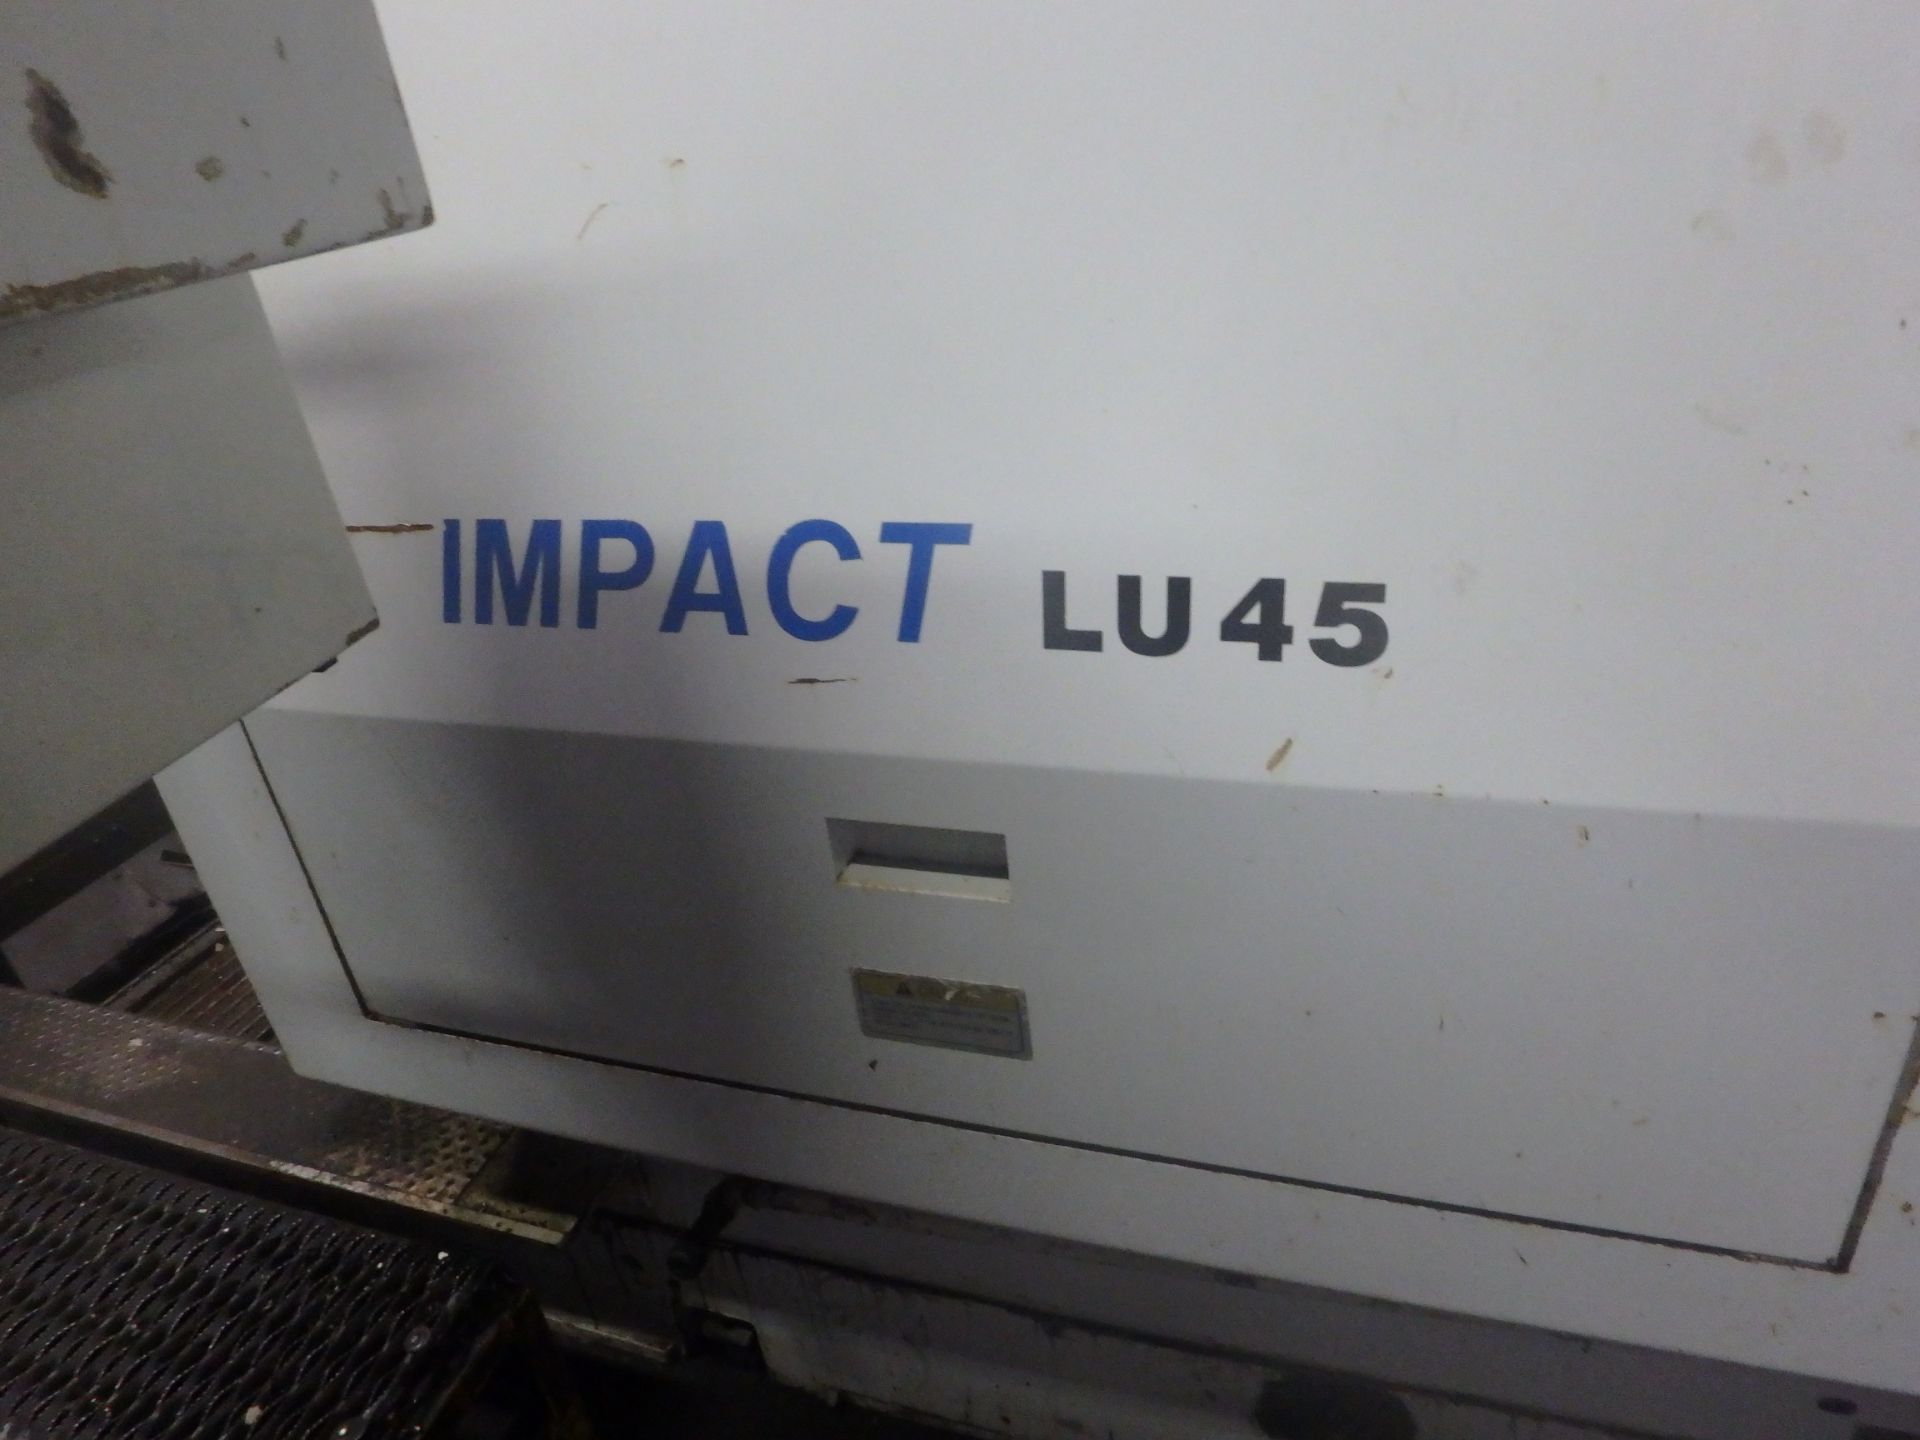 Okuma IMPACT LU45 CNC Lathe, OSP7000L Control - Image 10 of 11